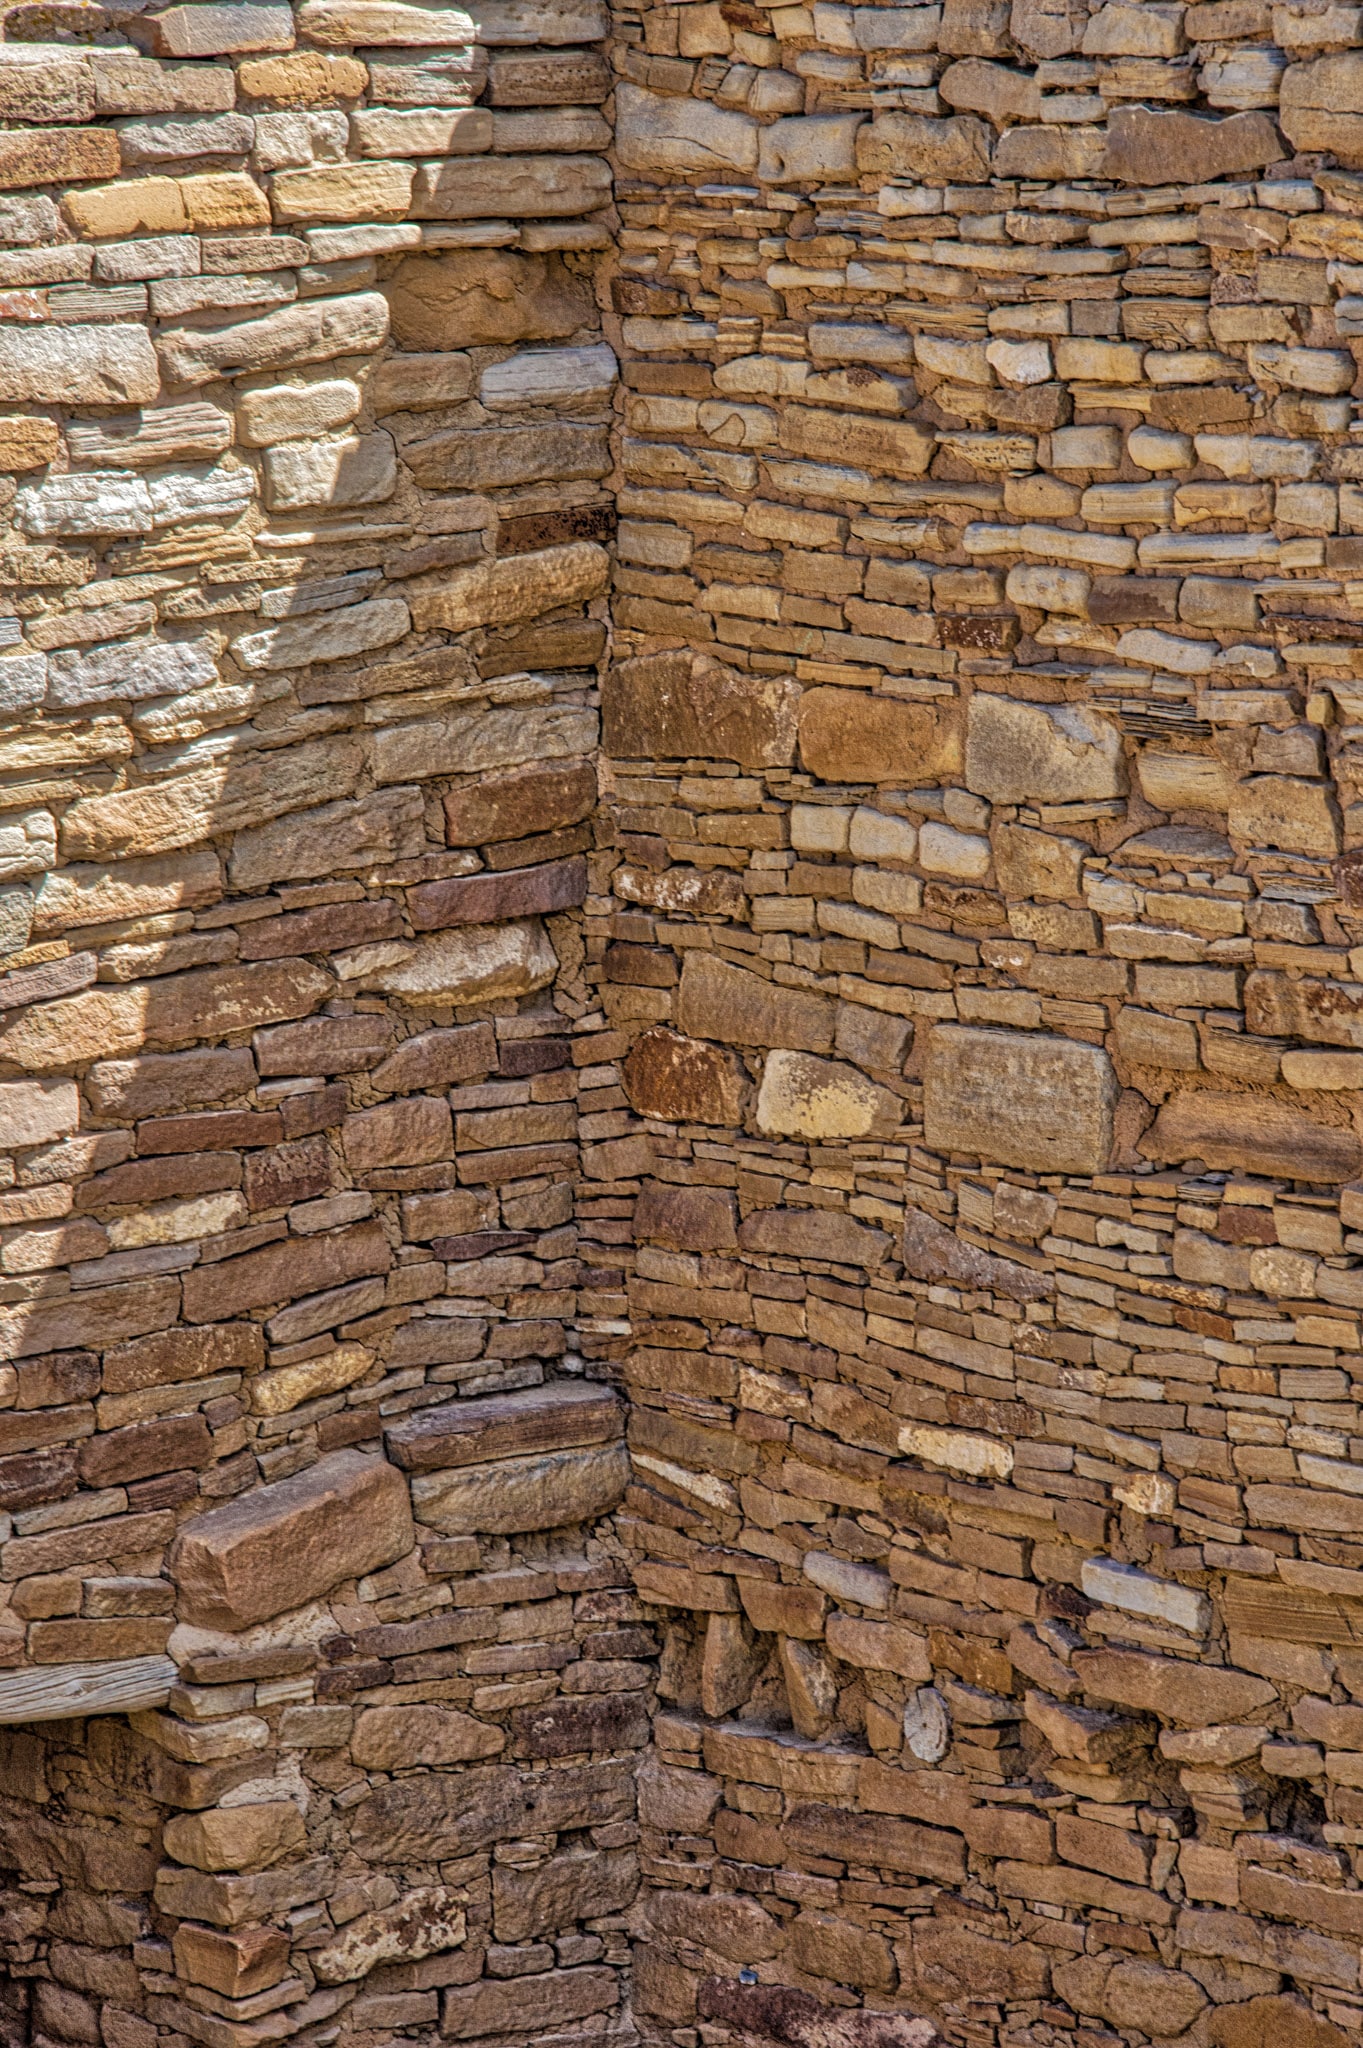 Stone Work at Pueblo del Arroyo in Chaco Canyon, New Mexico.